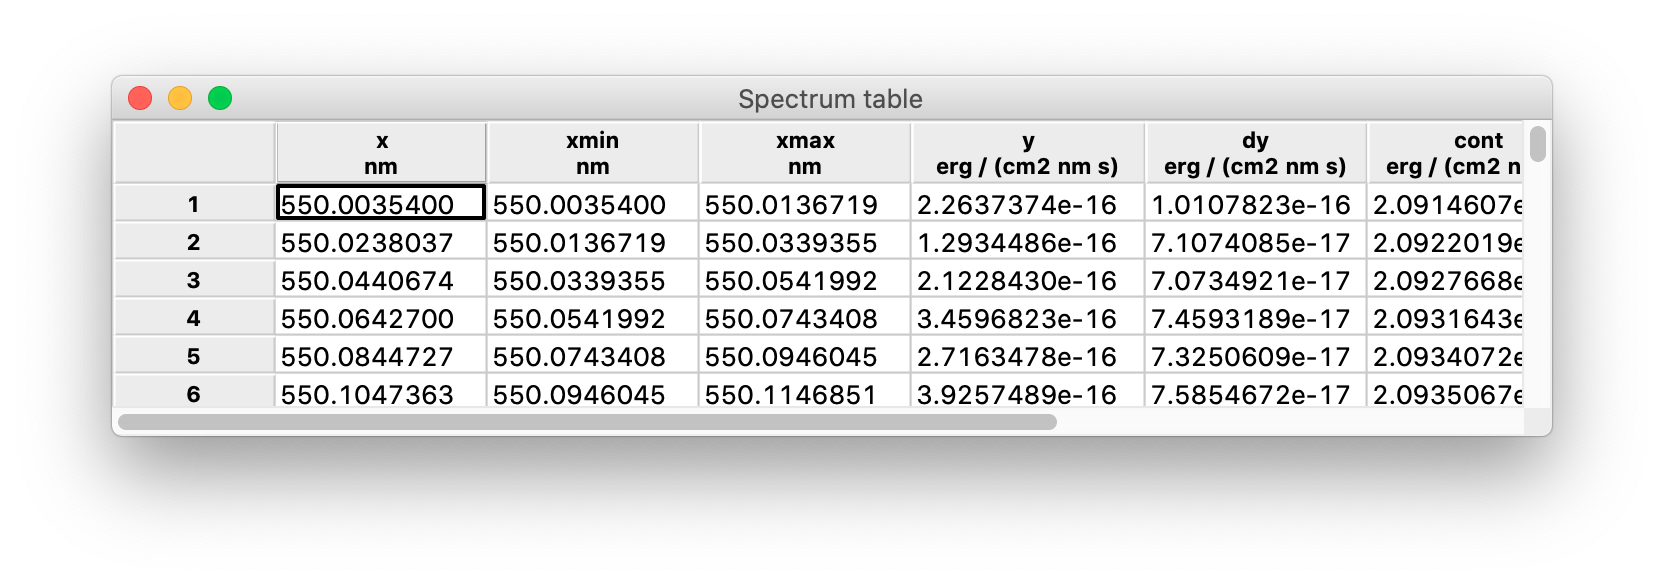 Spectrum table